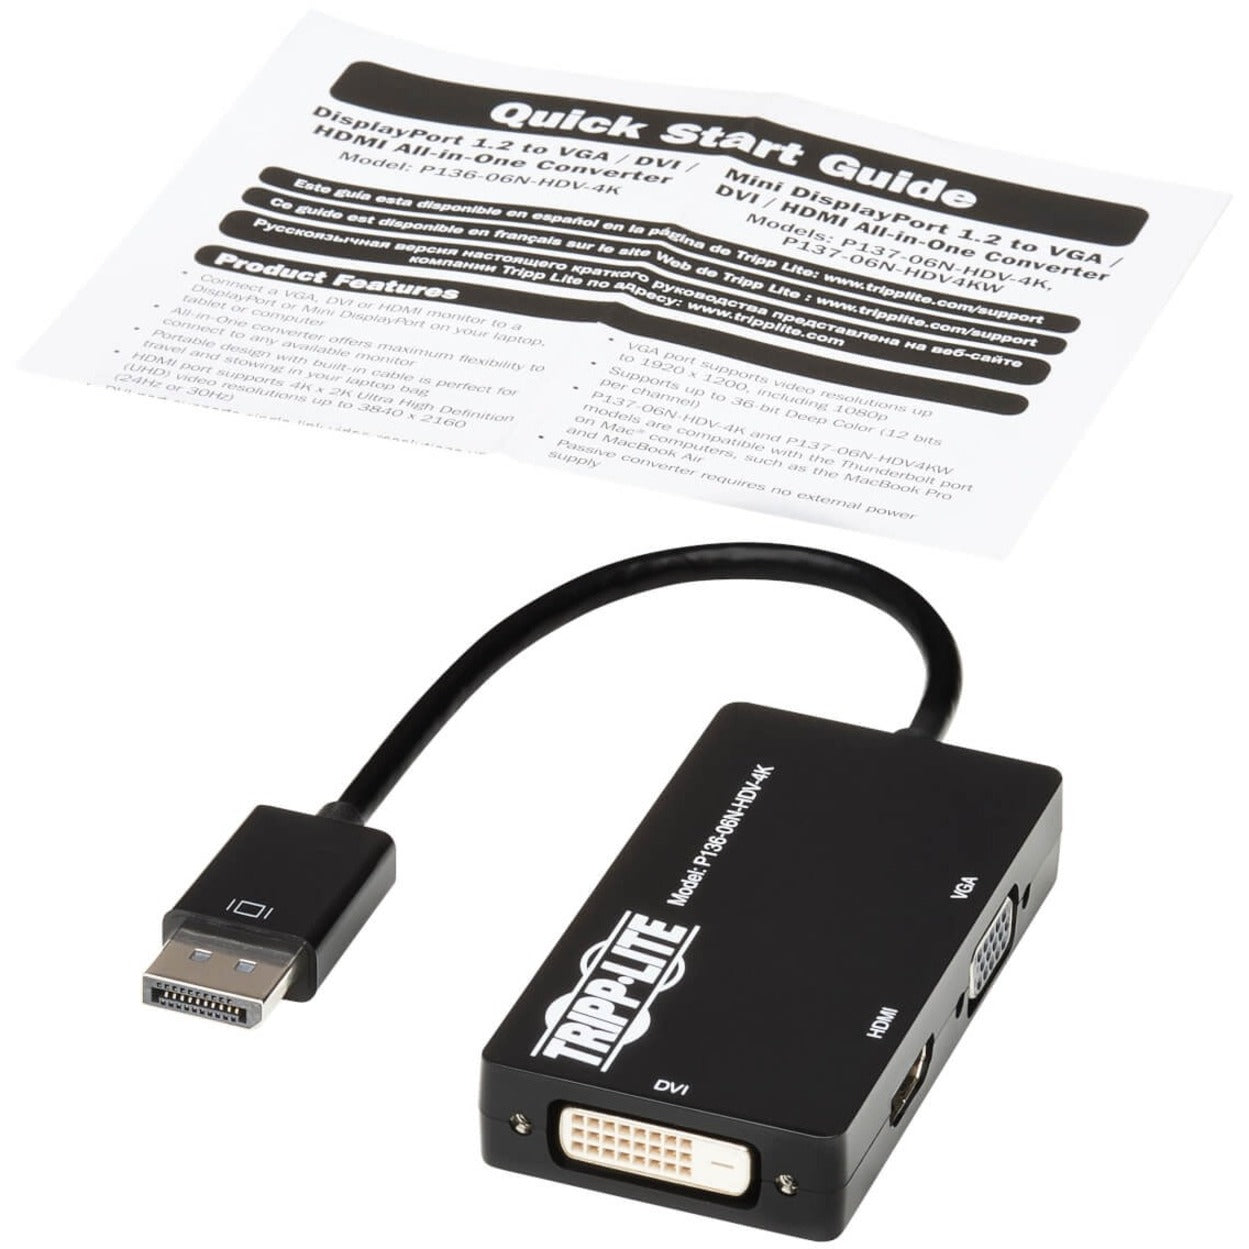 Tripp Lite P136-06NHDV4KBP DVI/DisplayPort/HDMI/VGA Audio/Video Device, 50 Pack